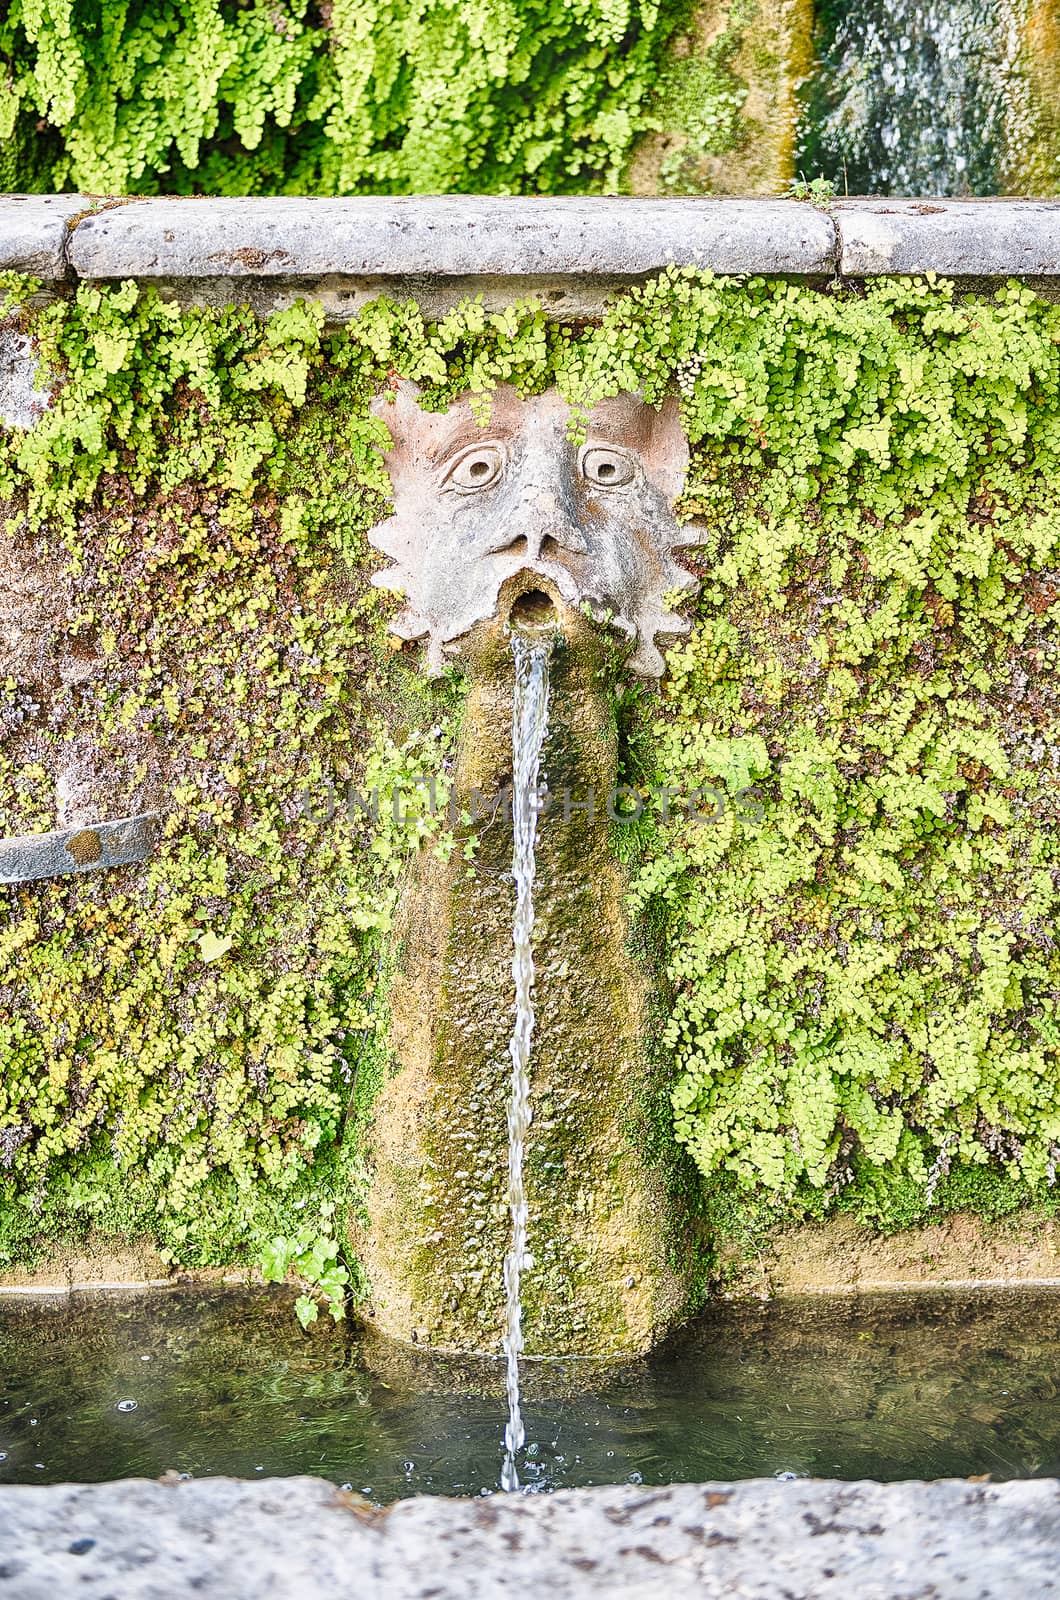 The hundred fountains, Villa d'Este, Tivoli, Italy by marcorubino